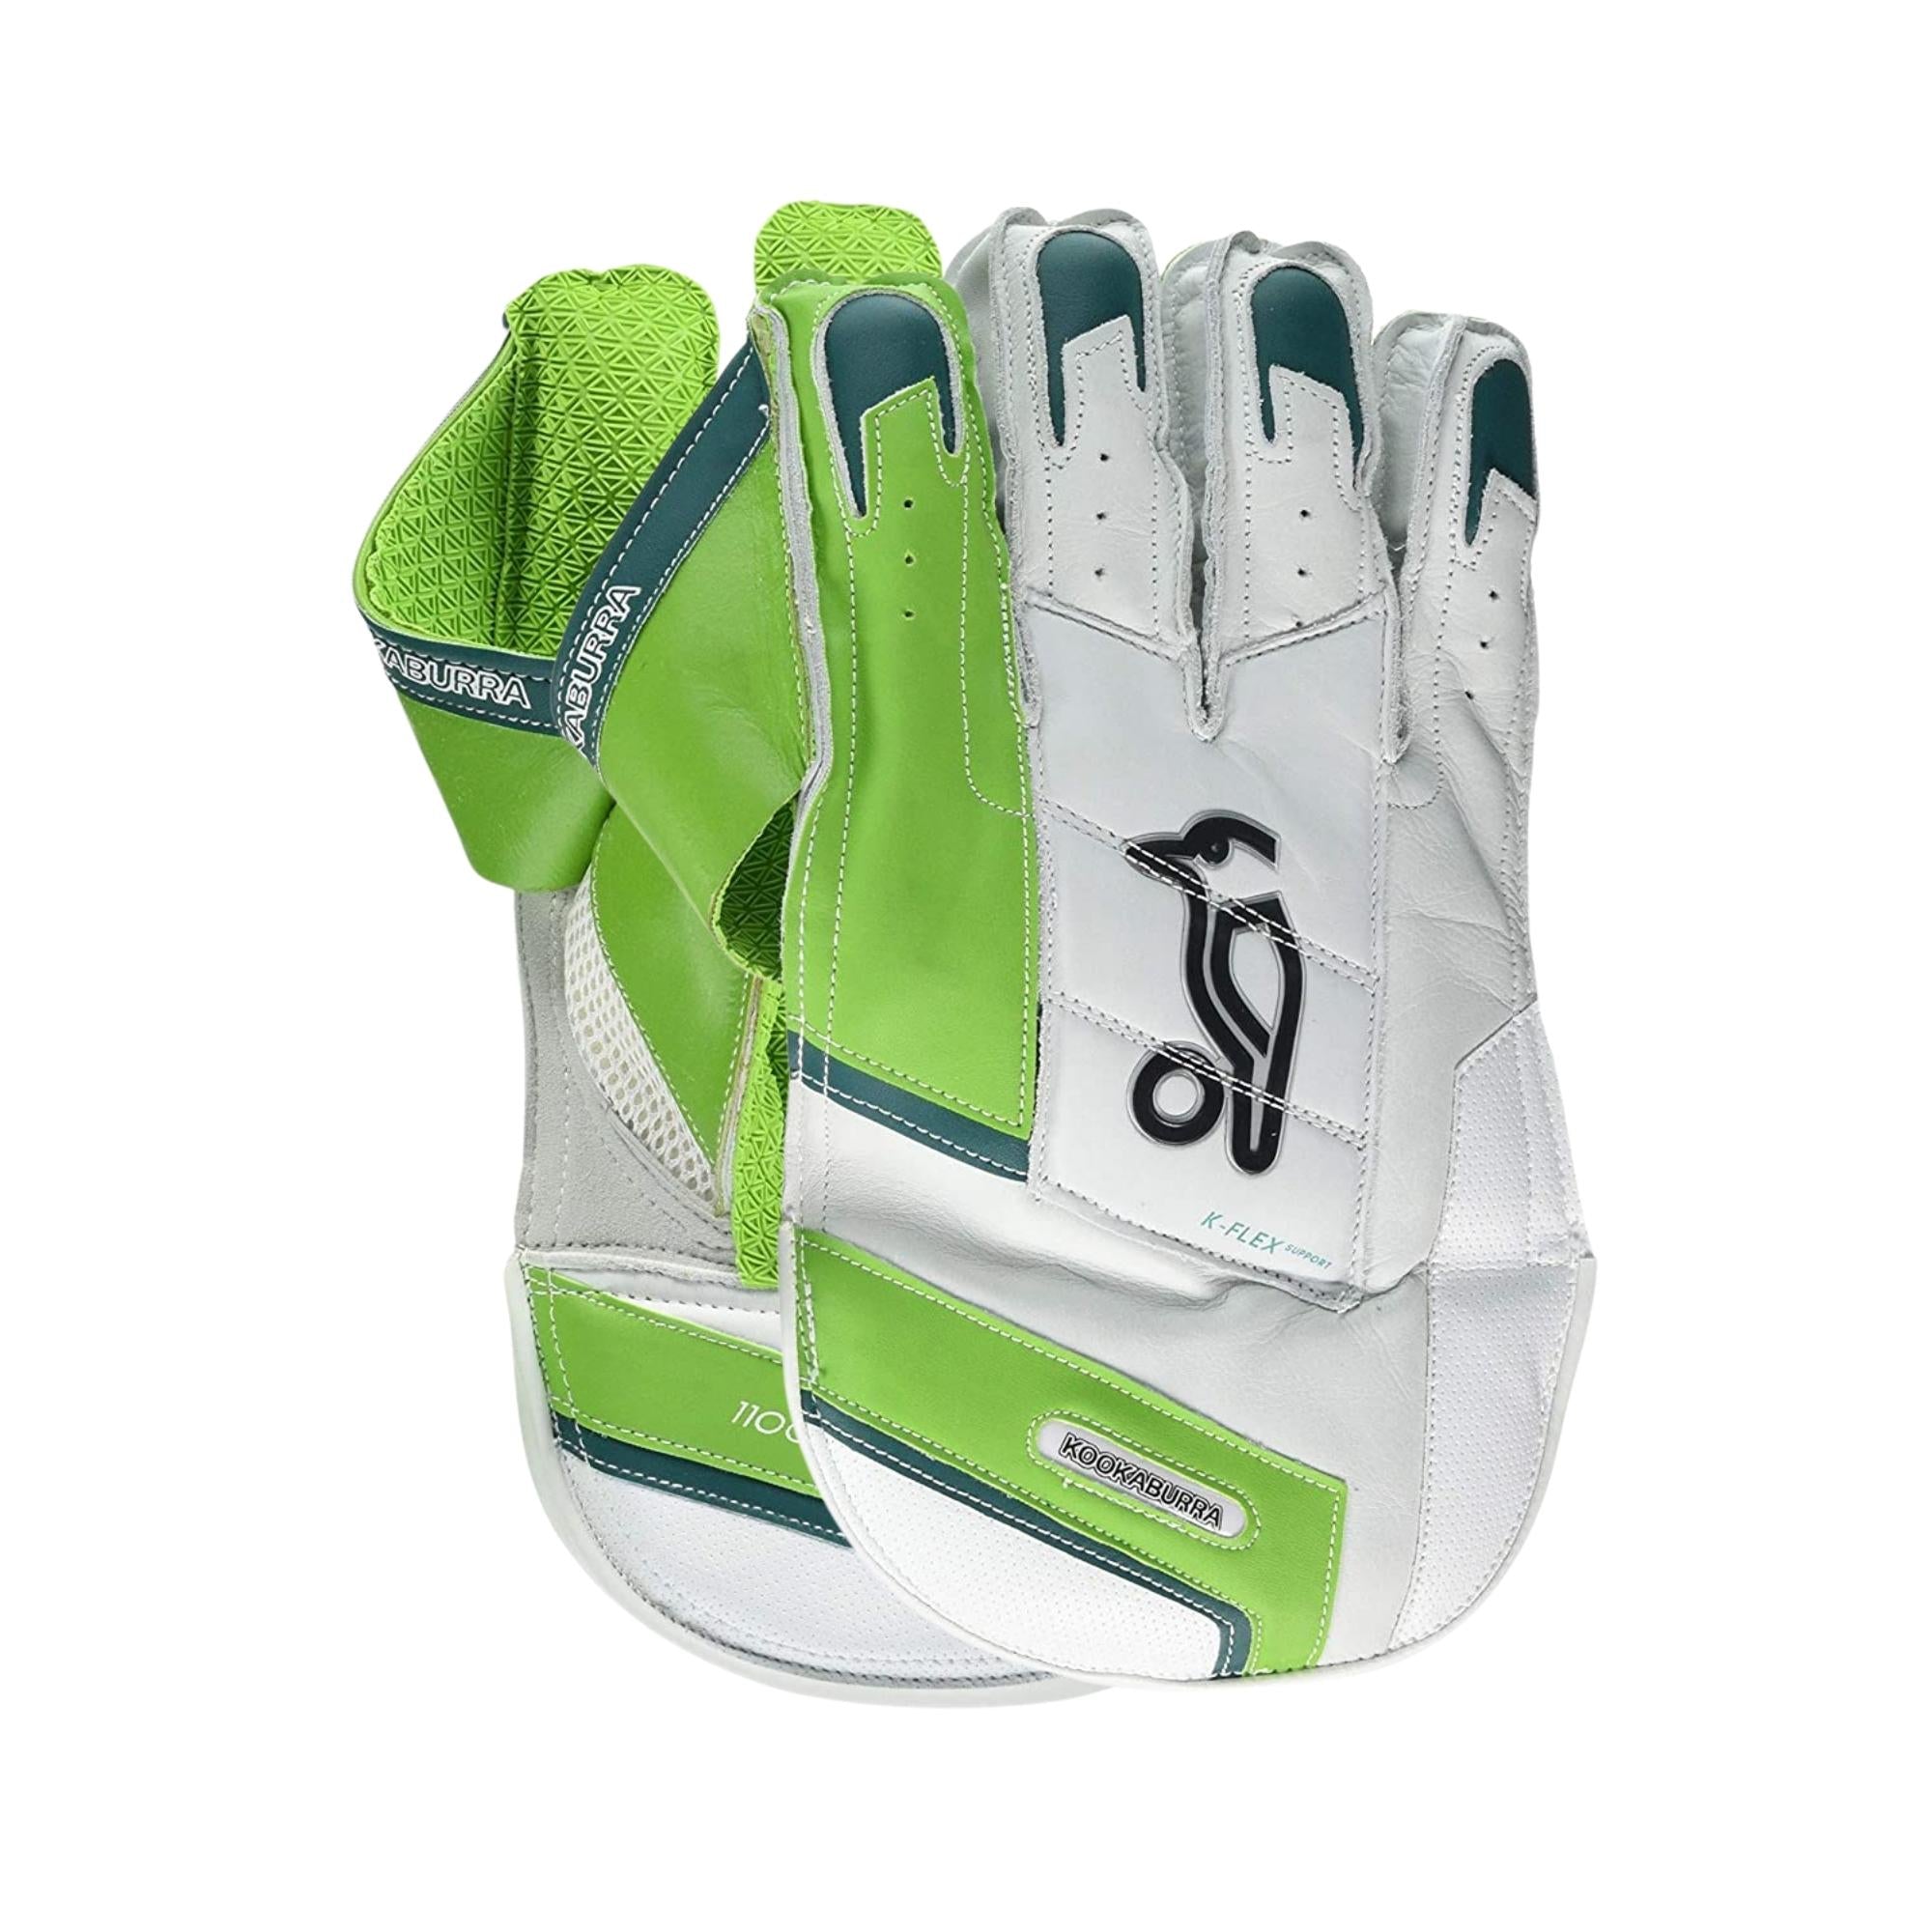 Kookaburra Wicket Keeping Gloves K-FLEX Support 1100